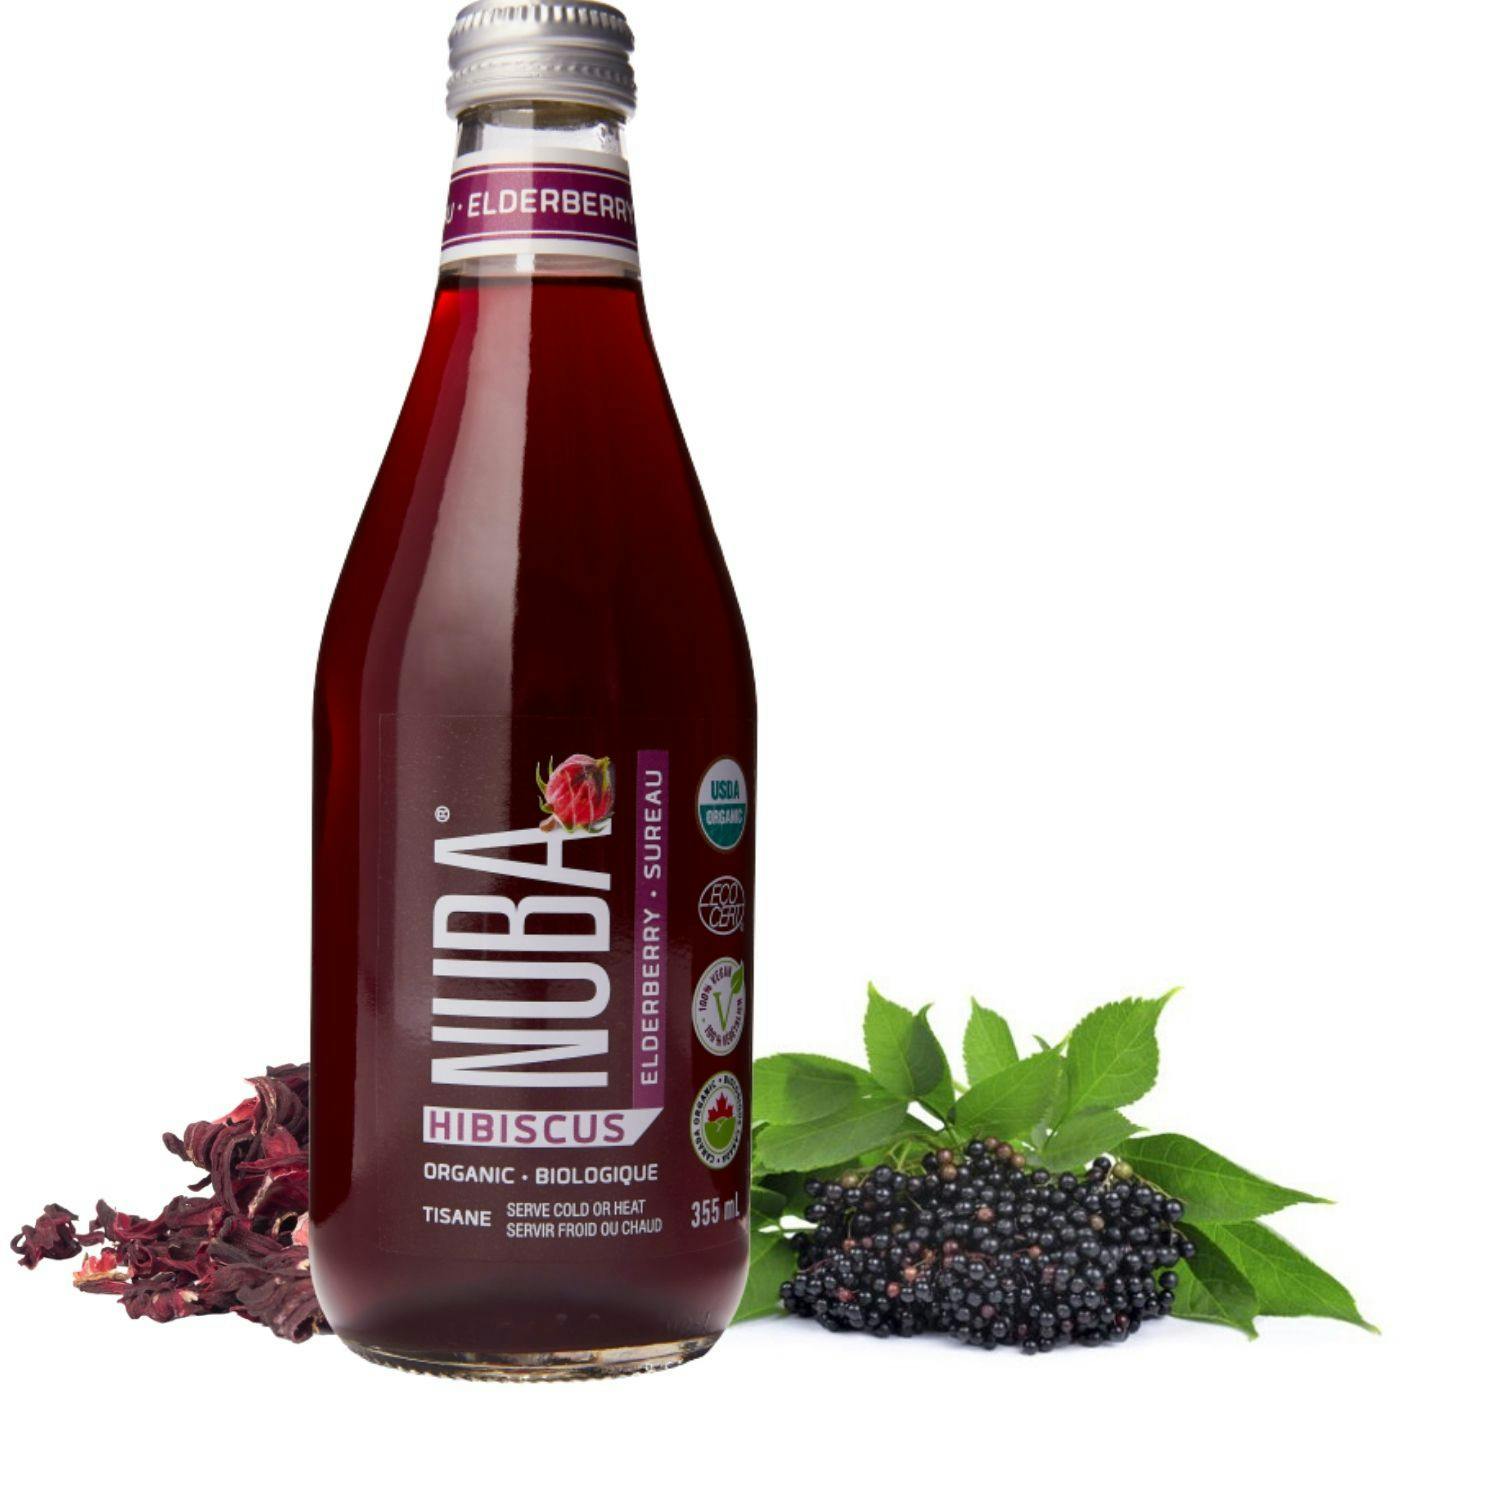 Nuba Tisane debuted an organic hibiscus cold tea with elderberry.